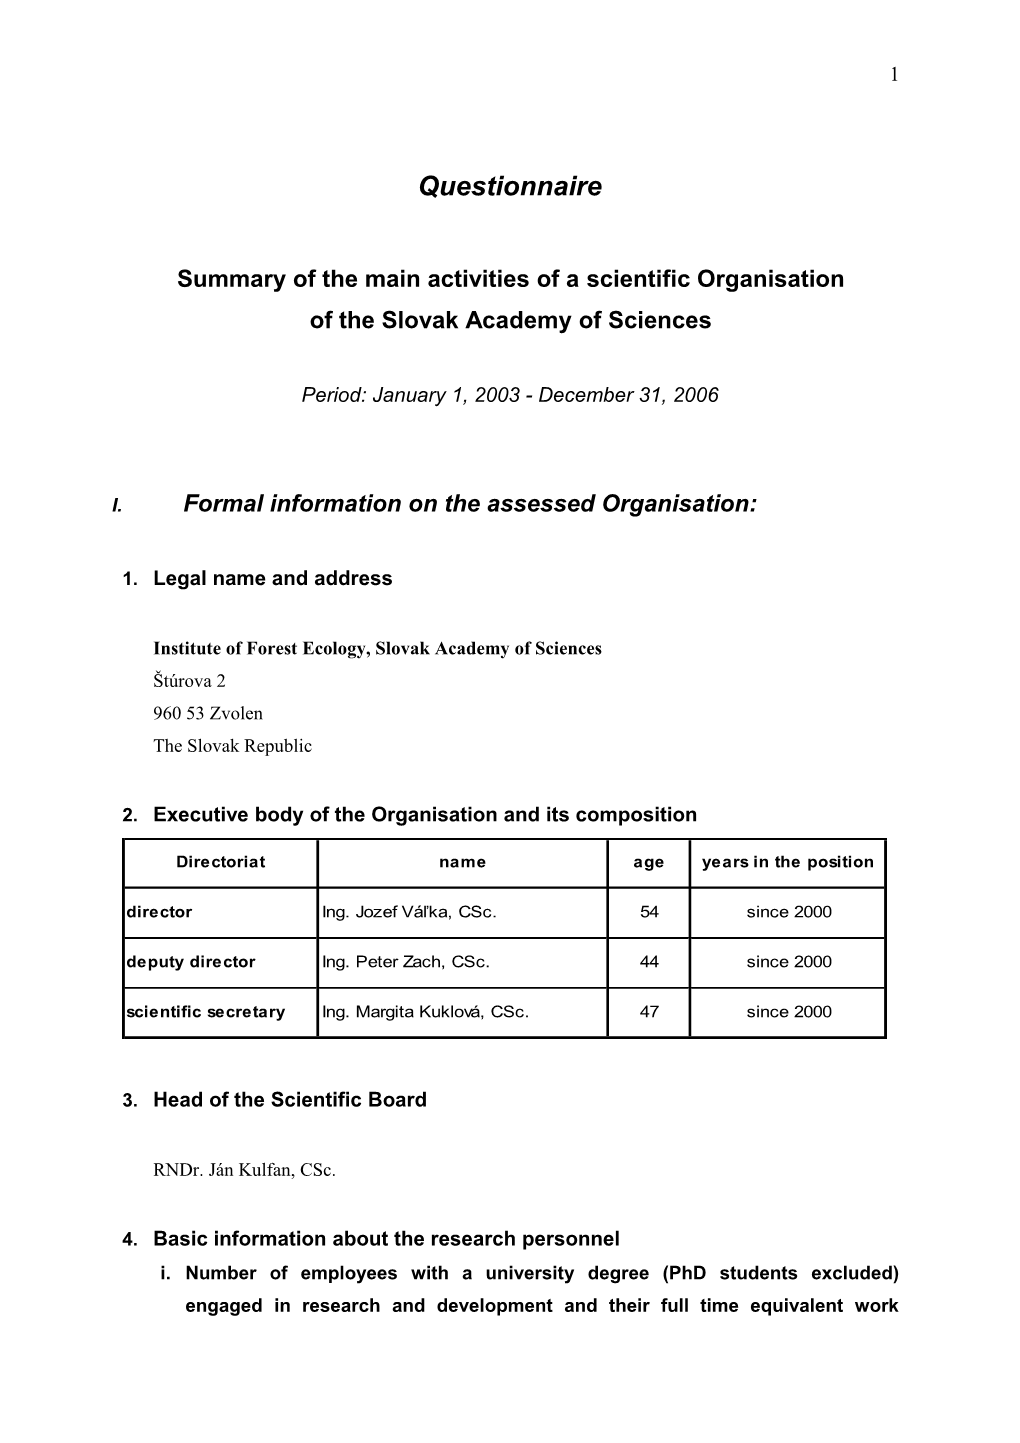 Summary of the Main Activities of Ascientific Organisation